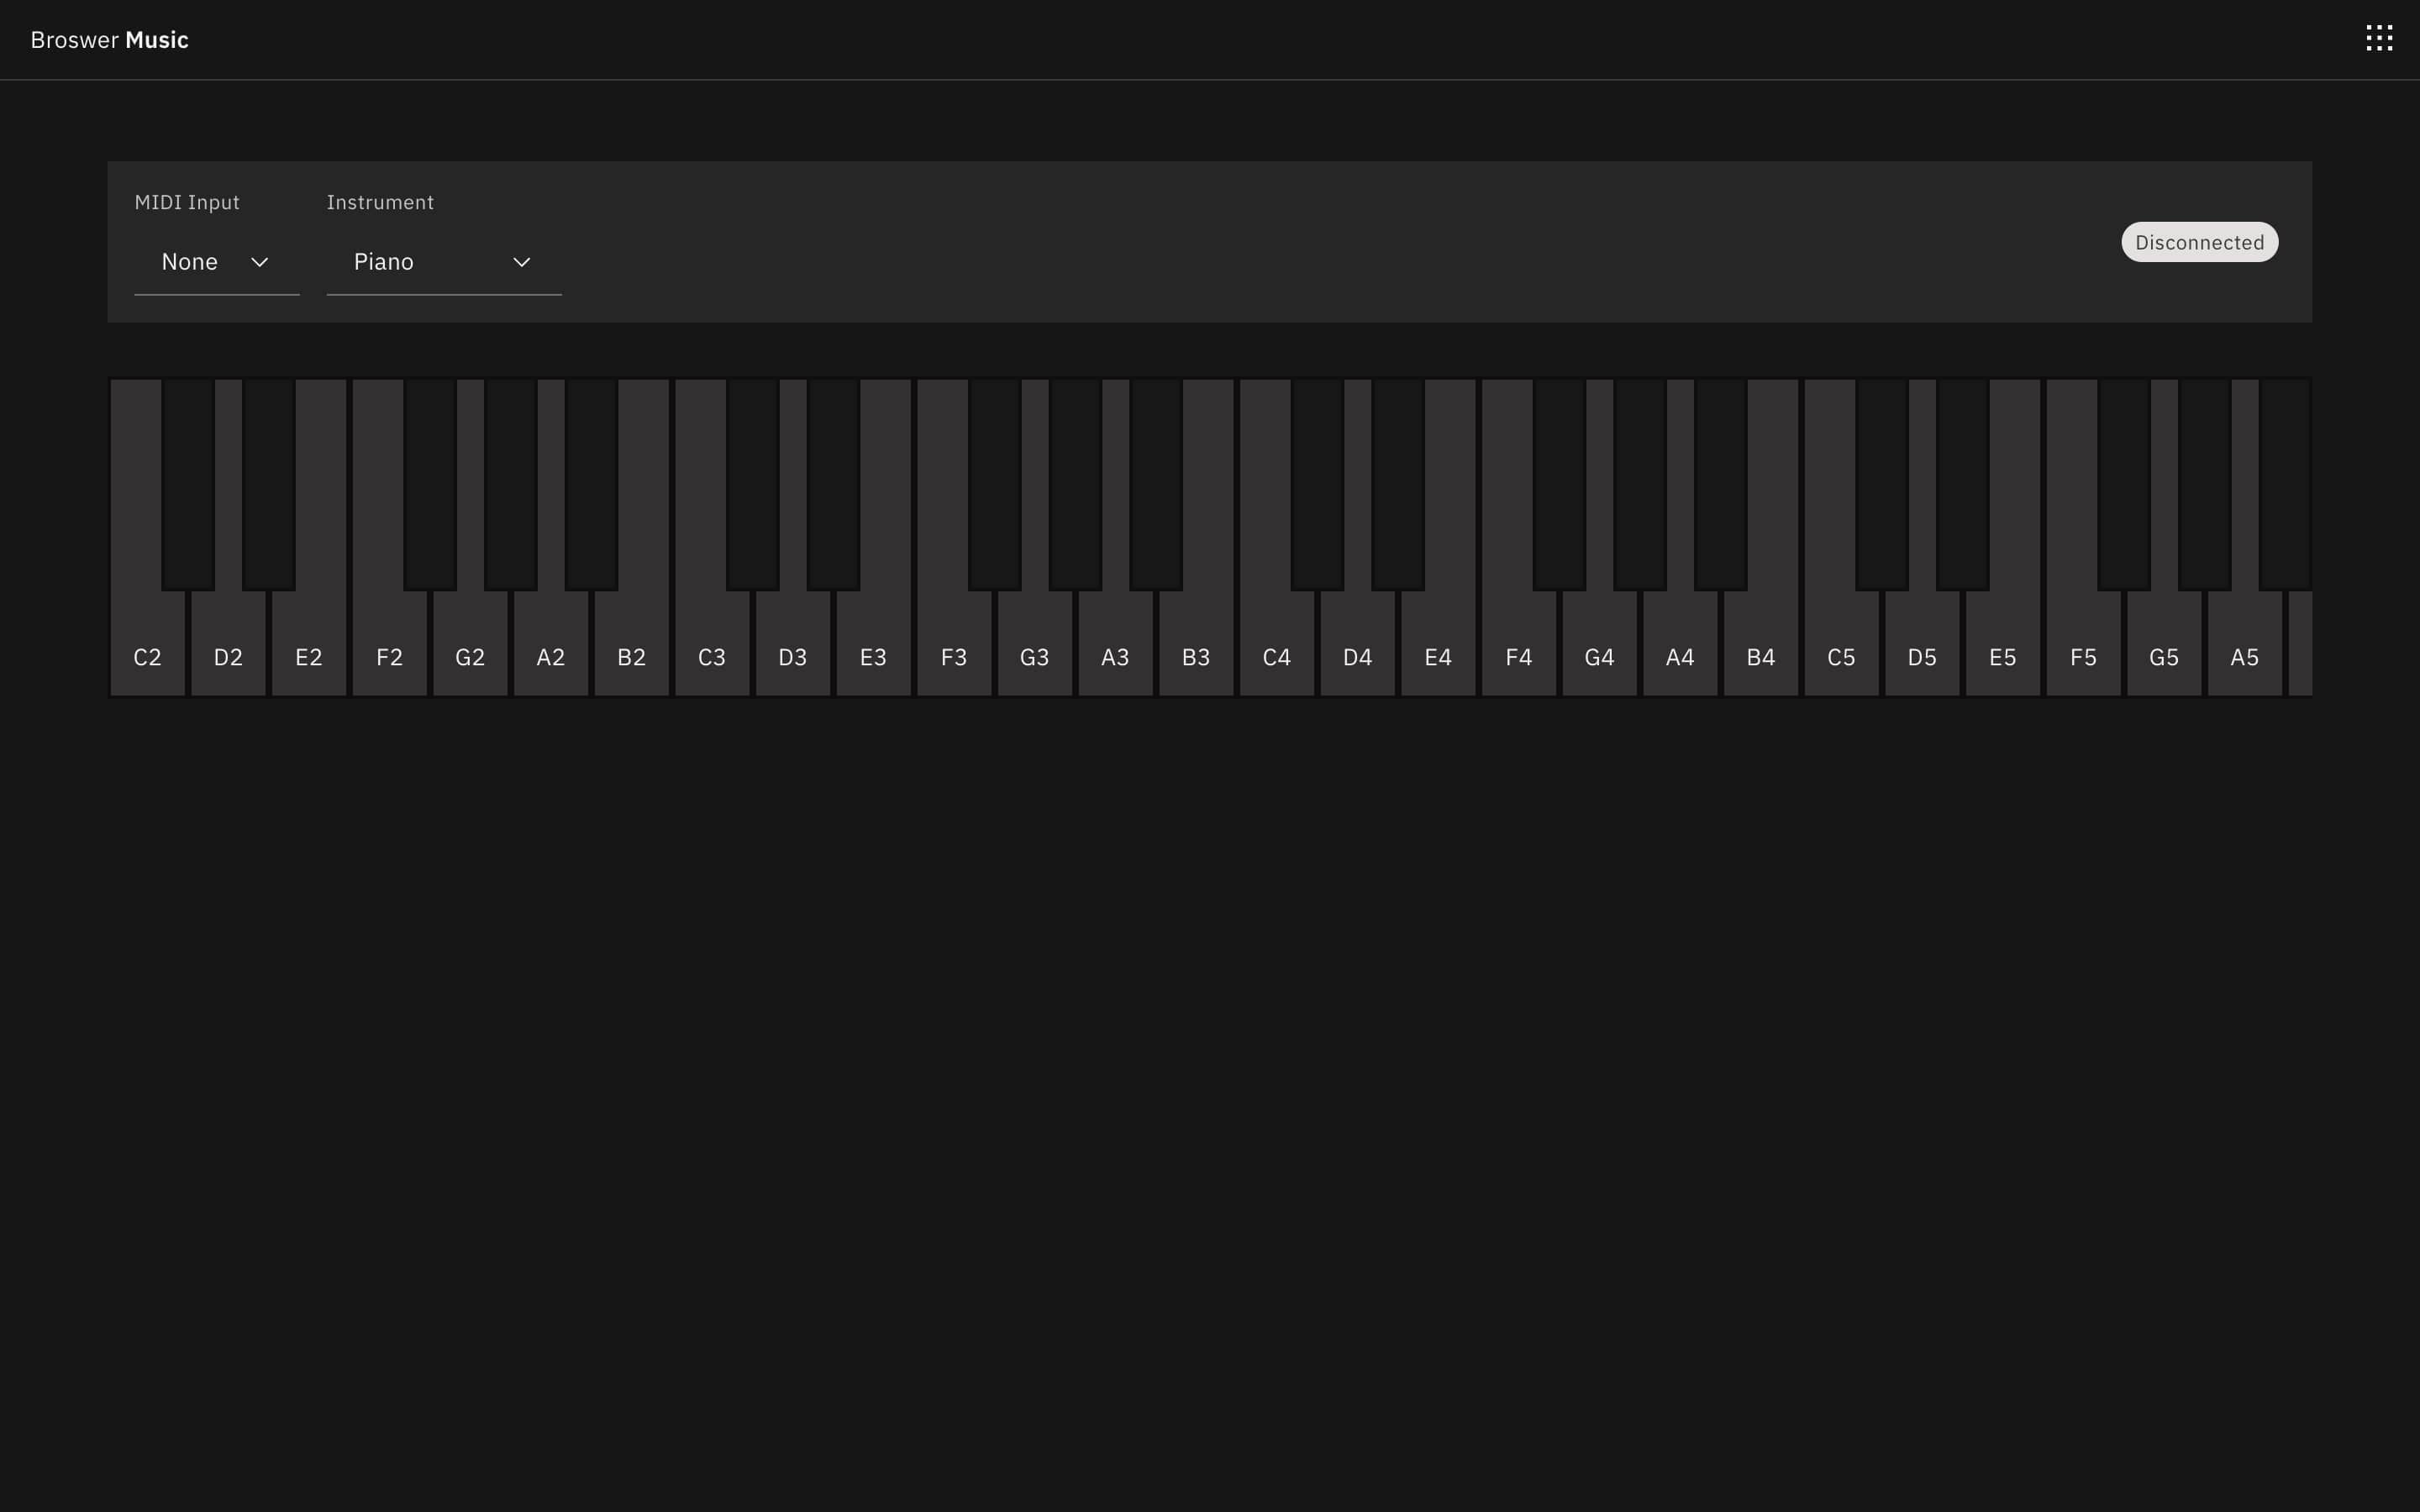 Screenshot of the browser music piano